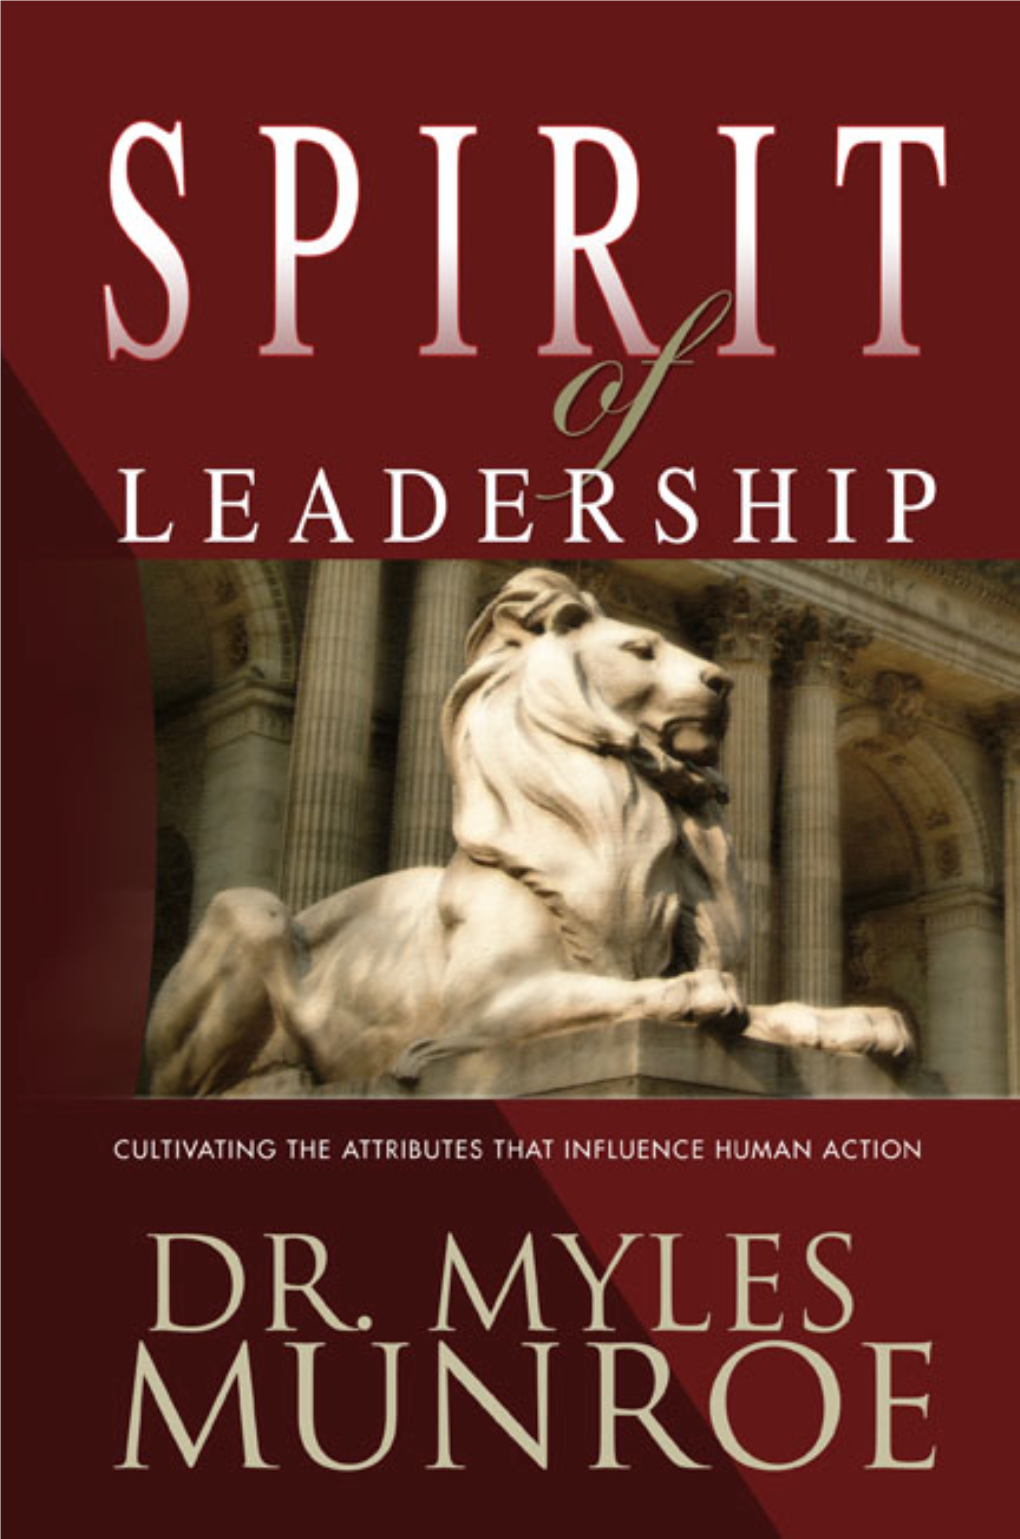 Spirit of Leadership Text 1St Print.Indd